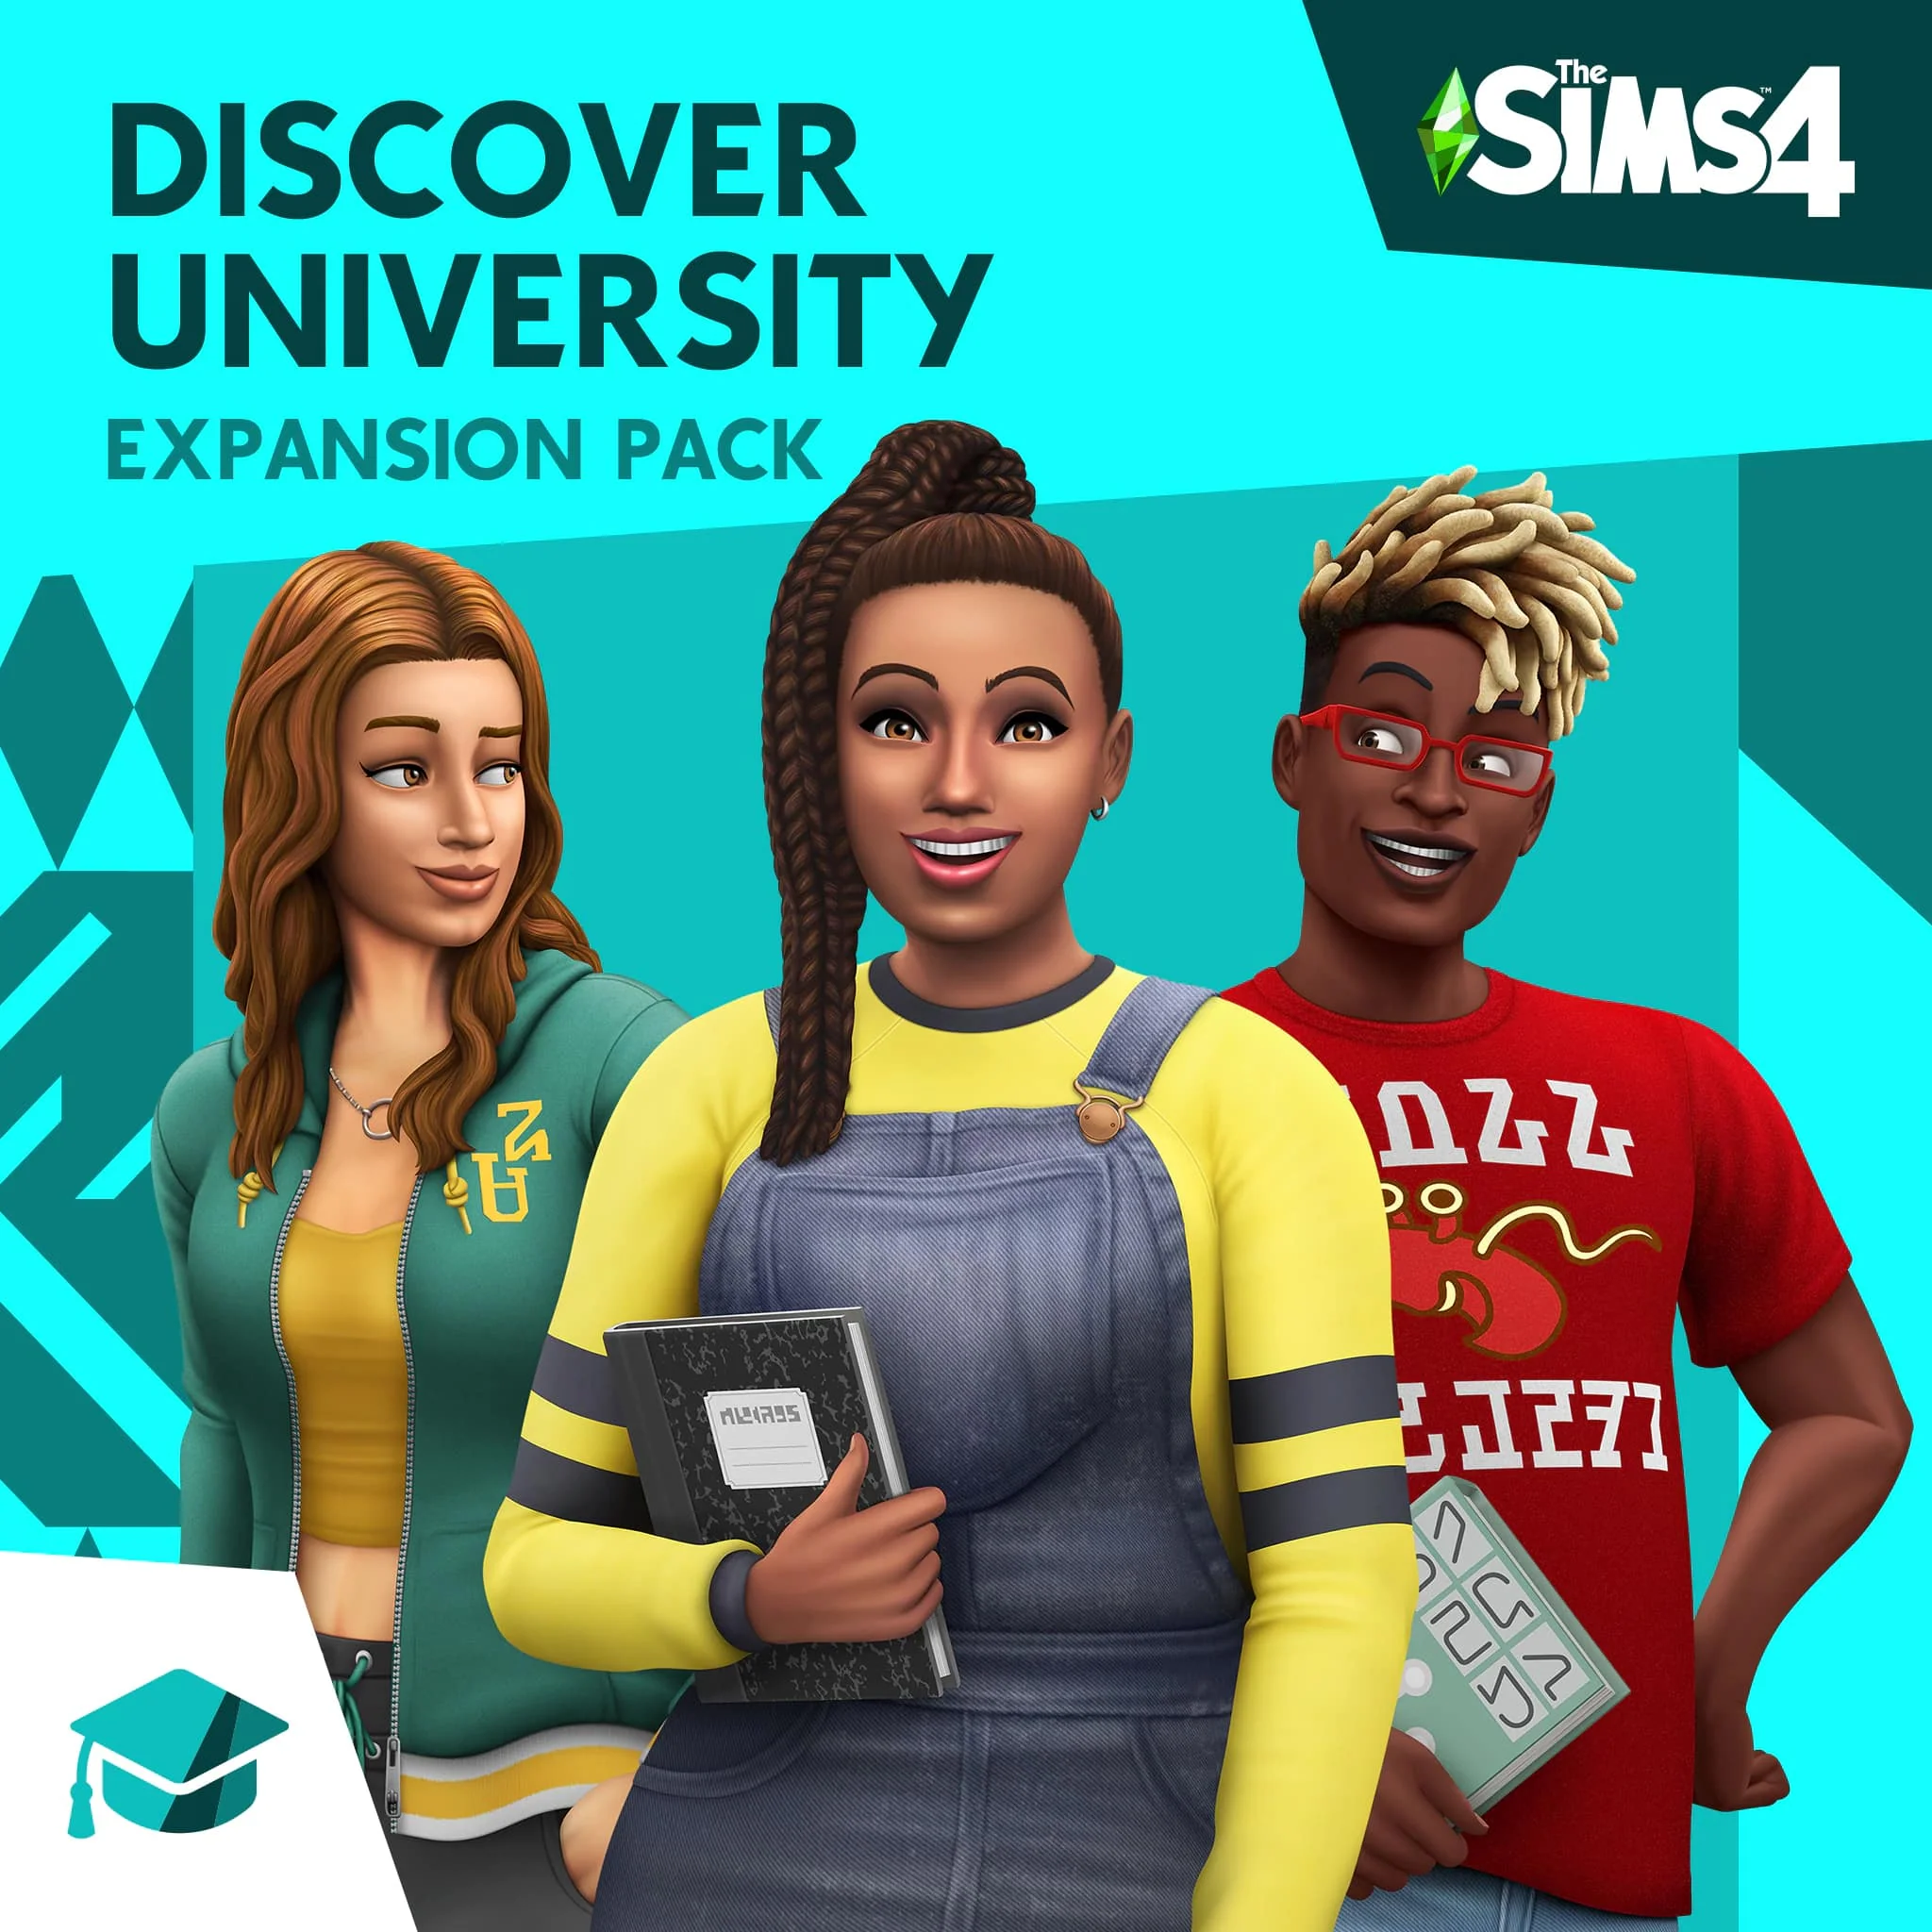 The Sims 4: Discover University DLC Global EA App | EA App Key - GLOBAL